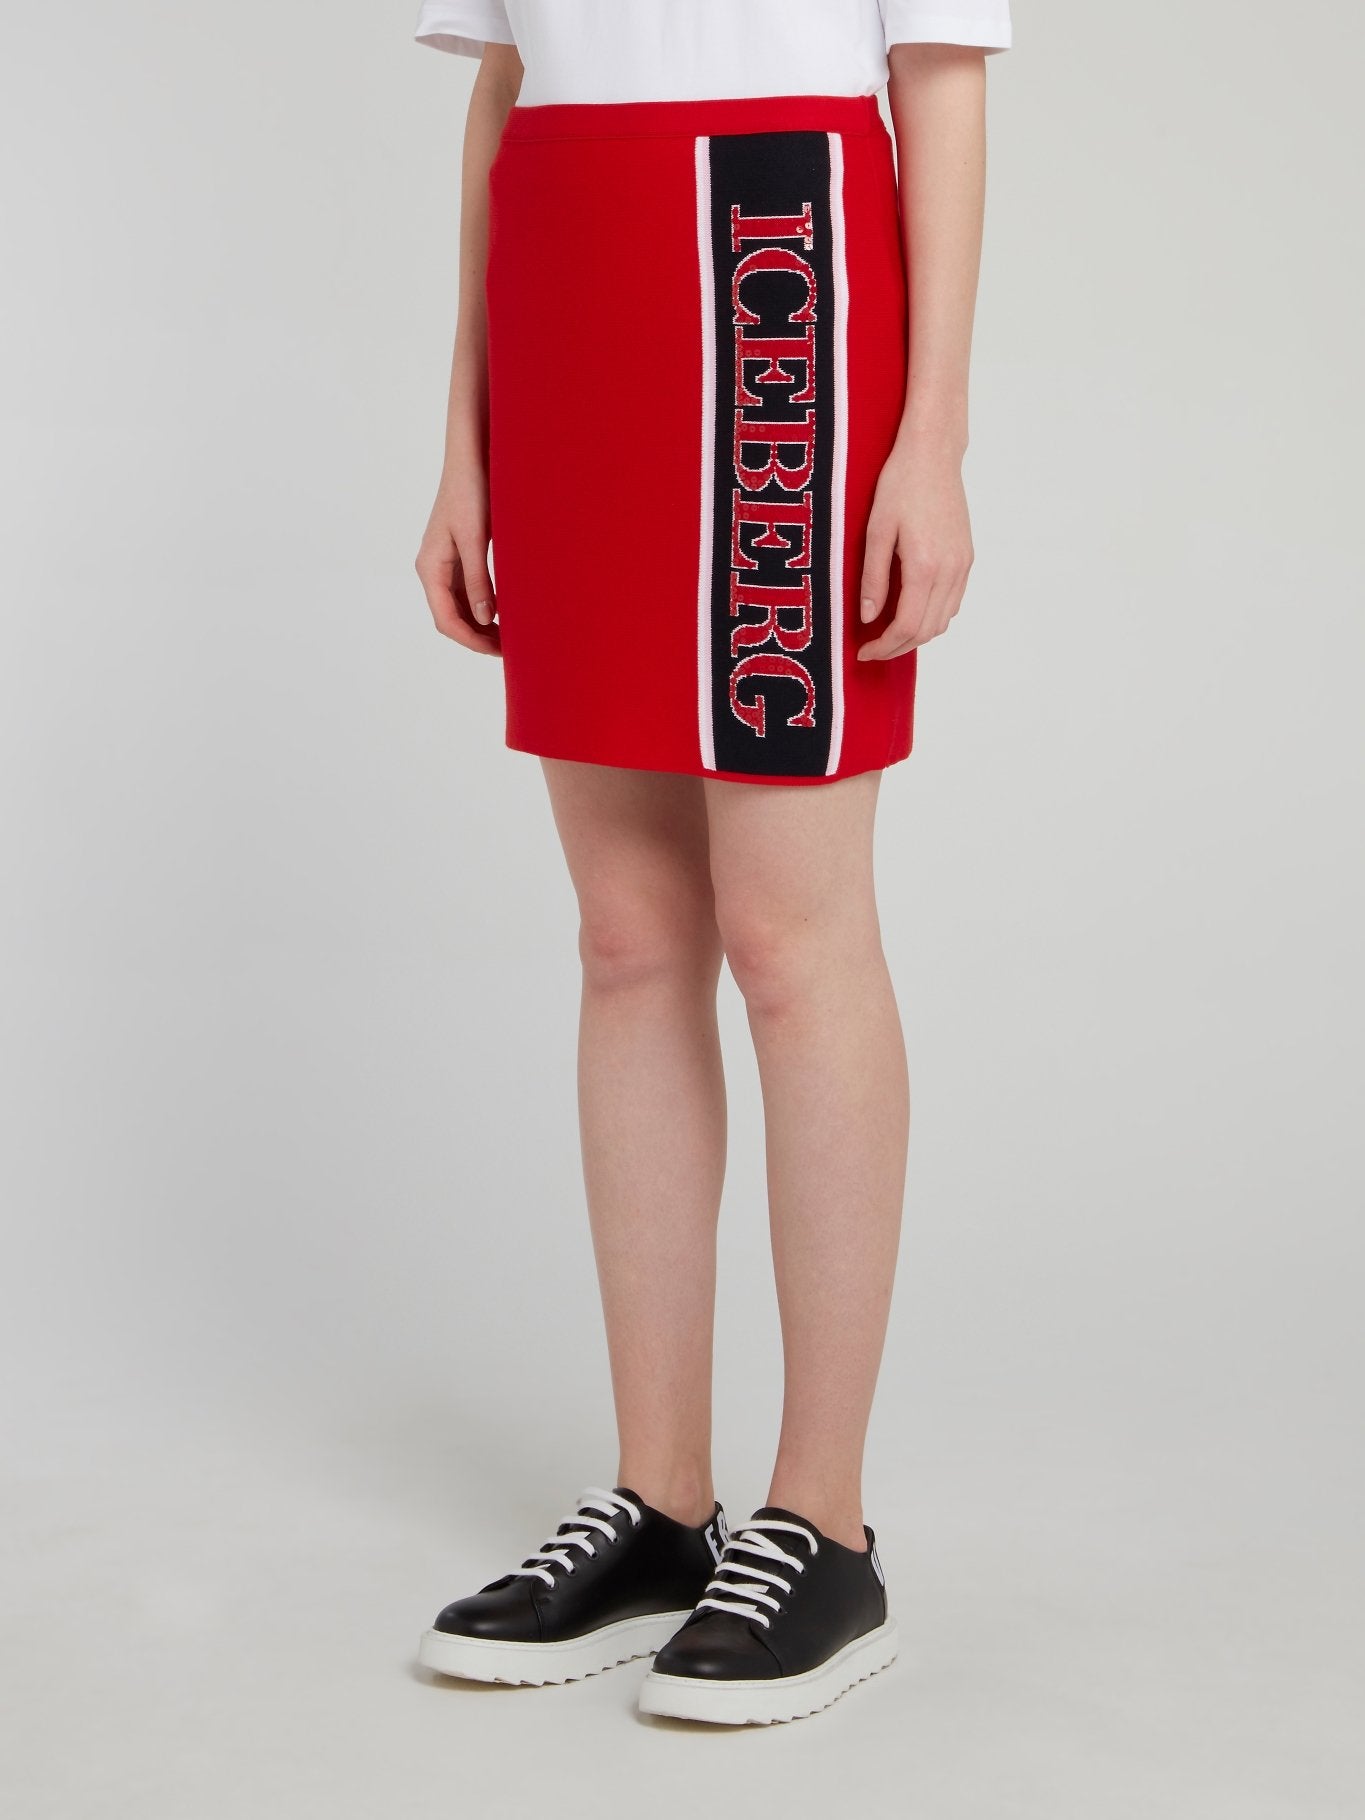 Красная юбка-мини с логотипом